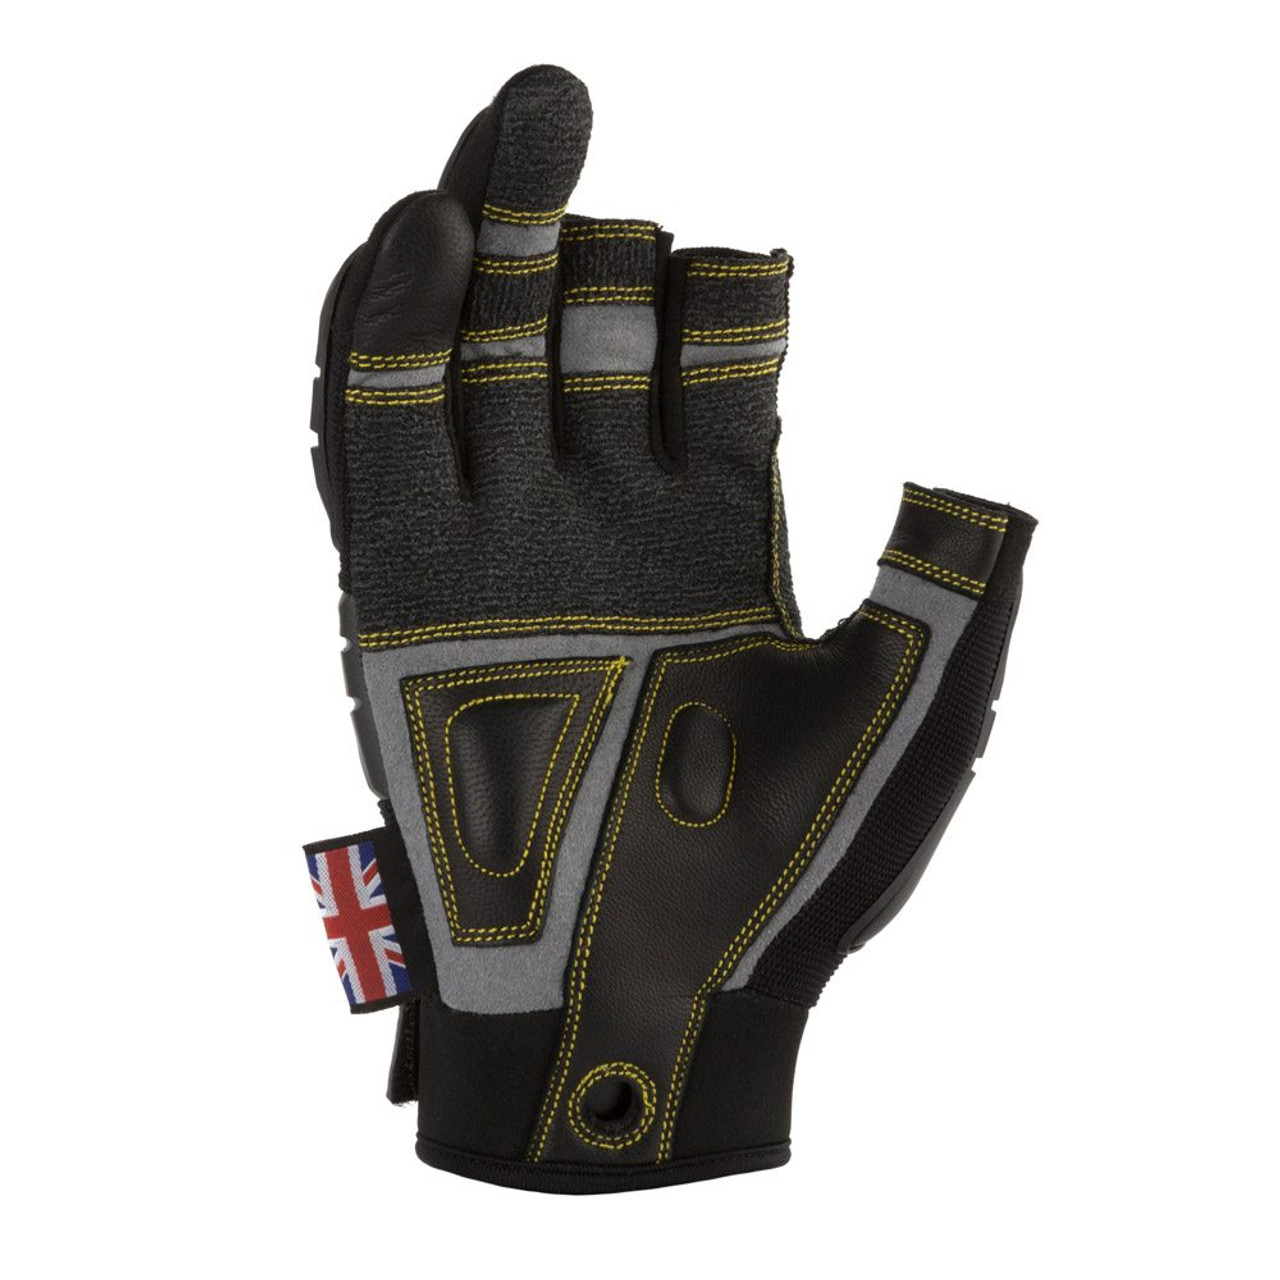 DIrty Rigger Protector 2.0 Heavy Duty Framer Gloves